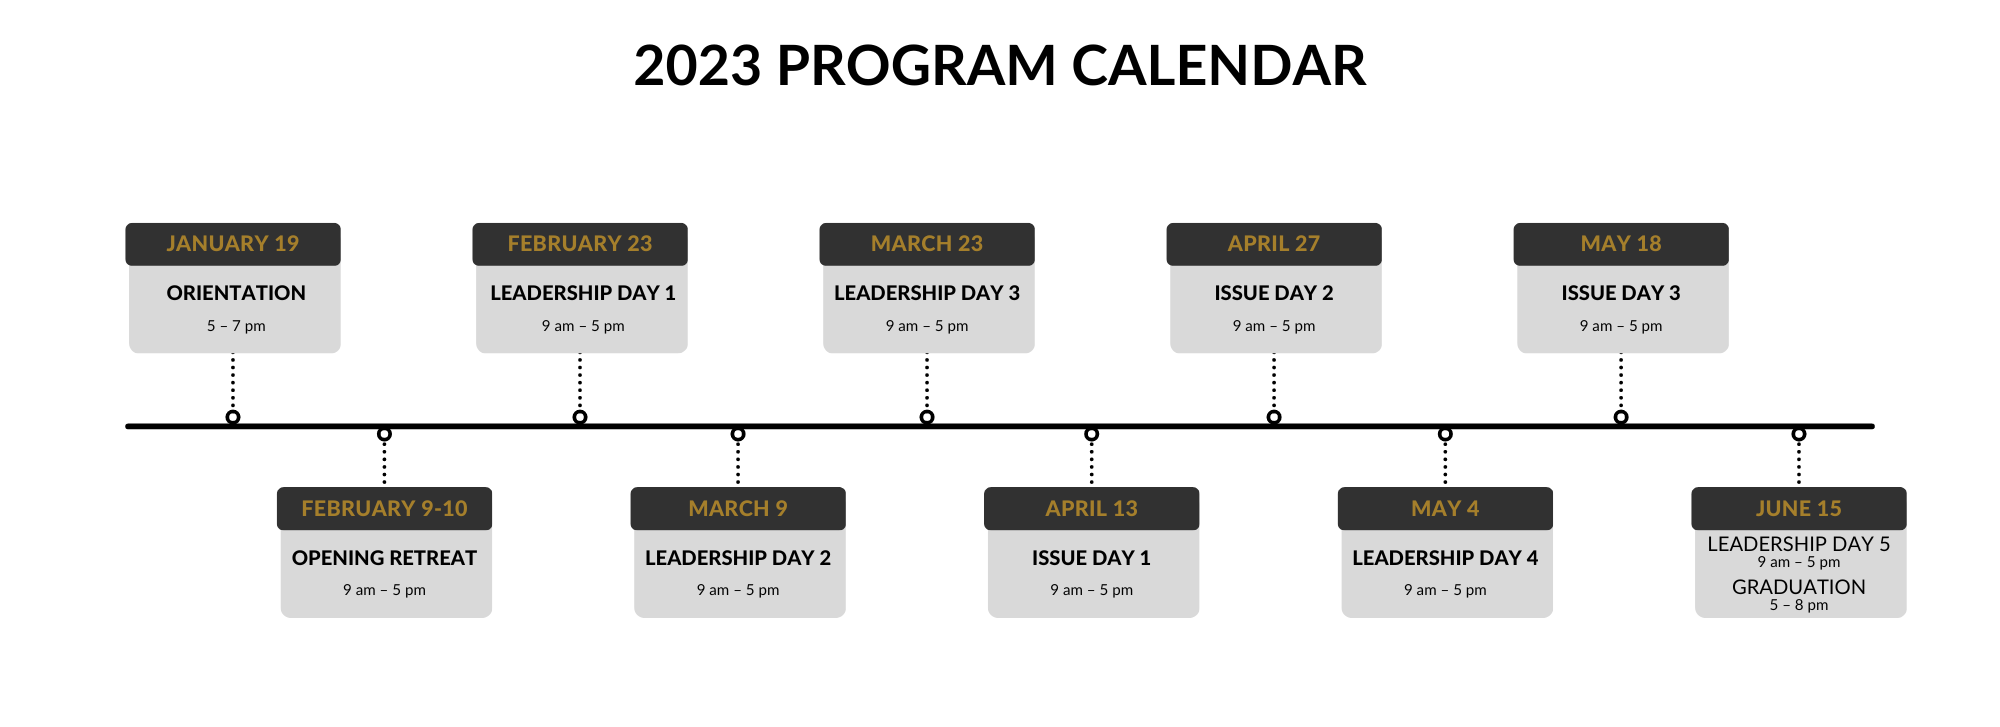 2023 Program Calendar